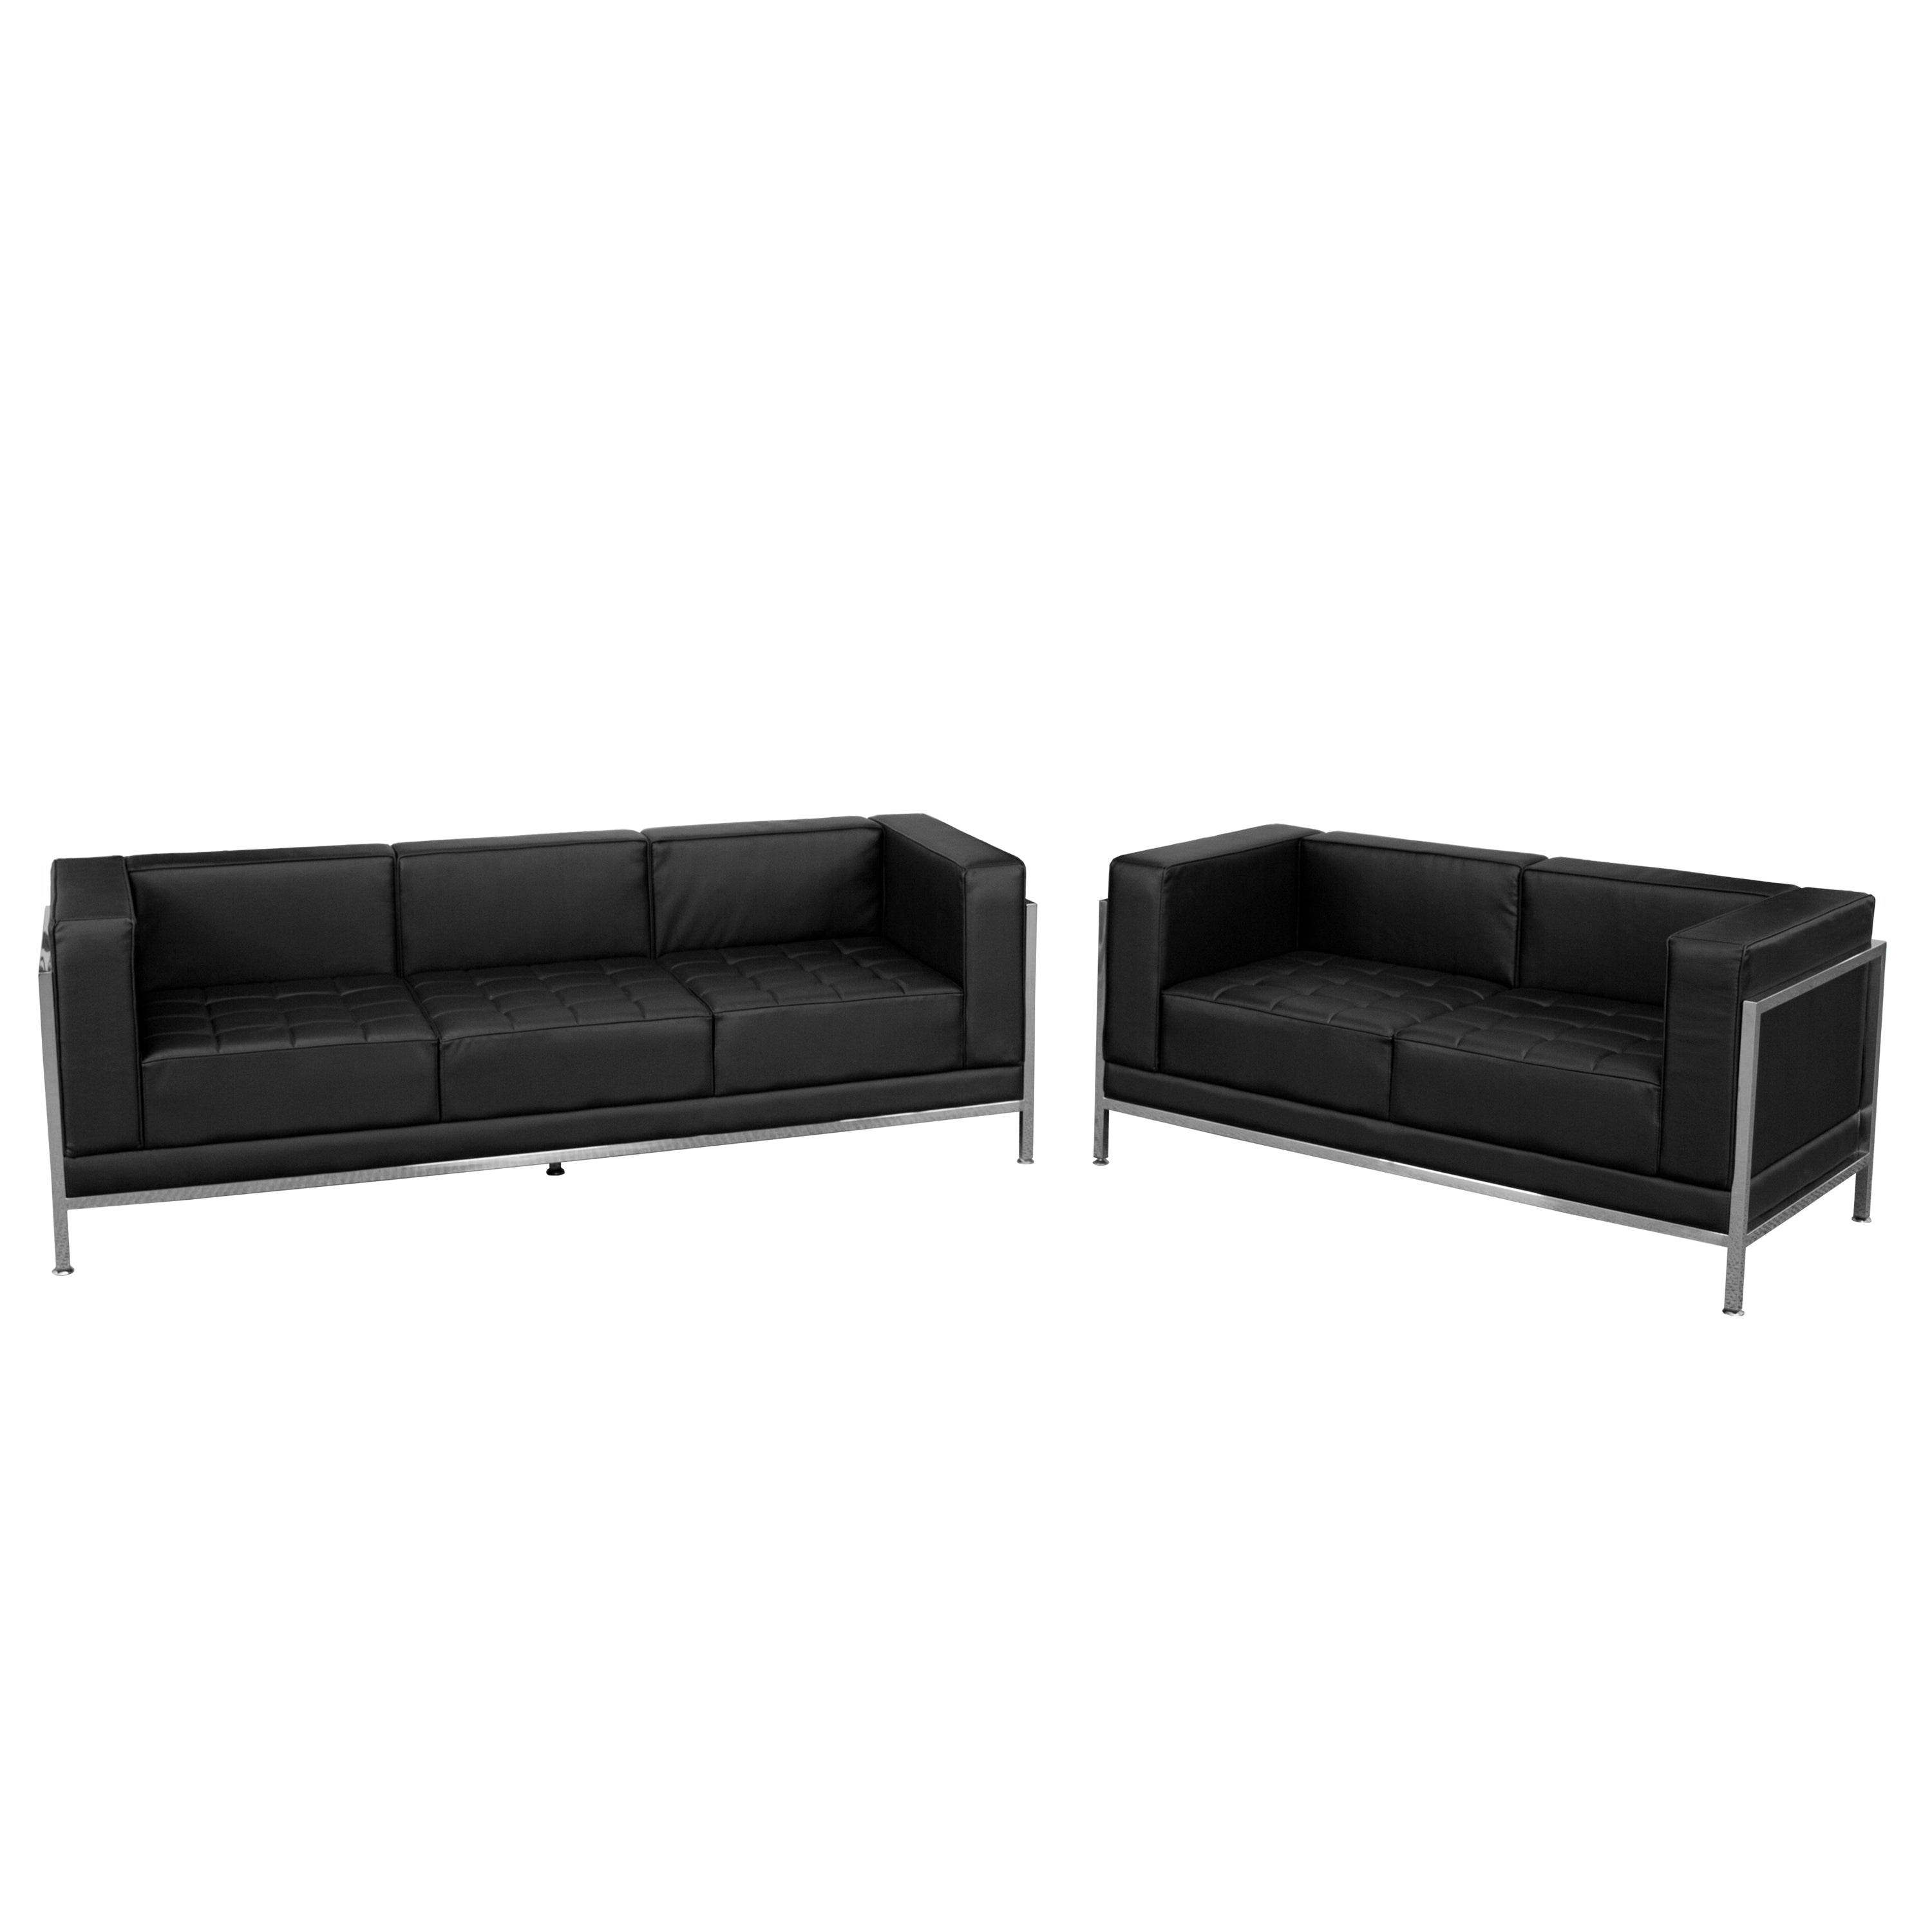 HERCULES Imagination Series LeatherSoft Sofa & Loveseat Set-Modular Reception Set-Flash Furniture-Wall2Wall Furnishings